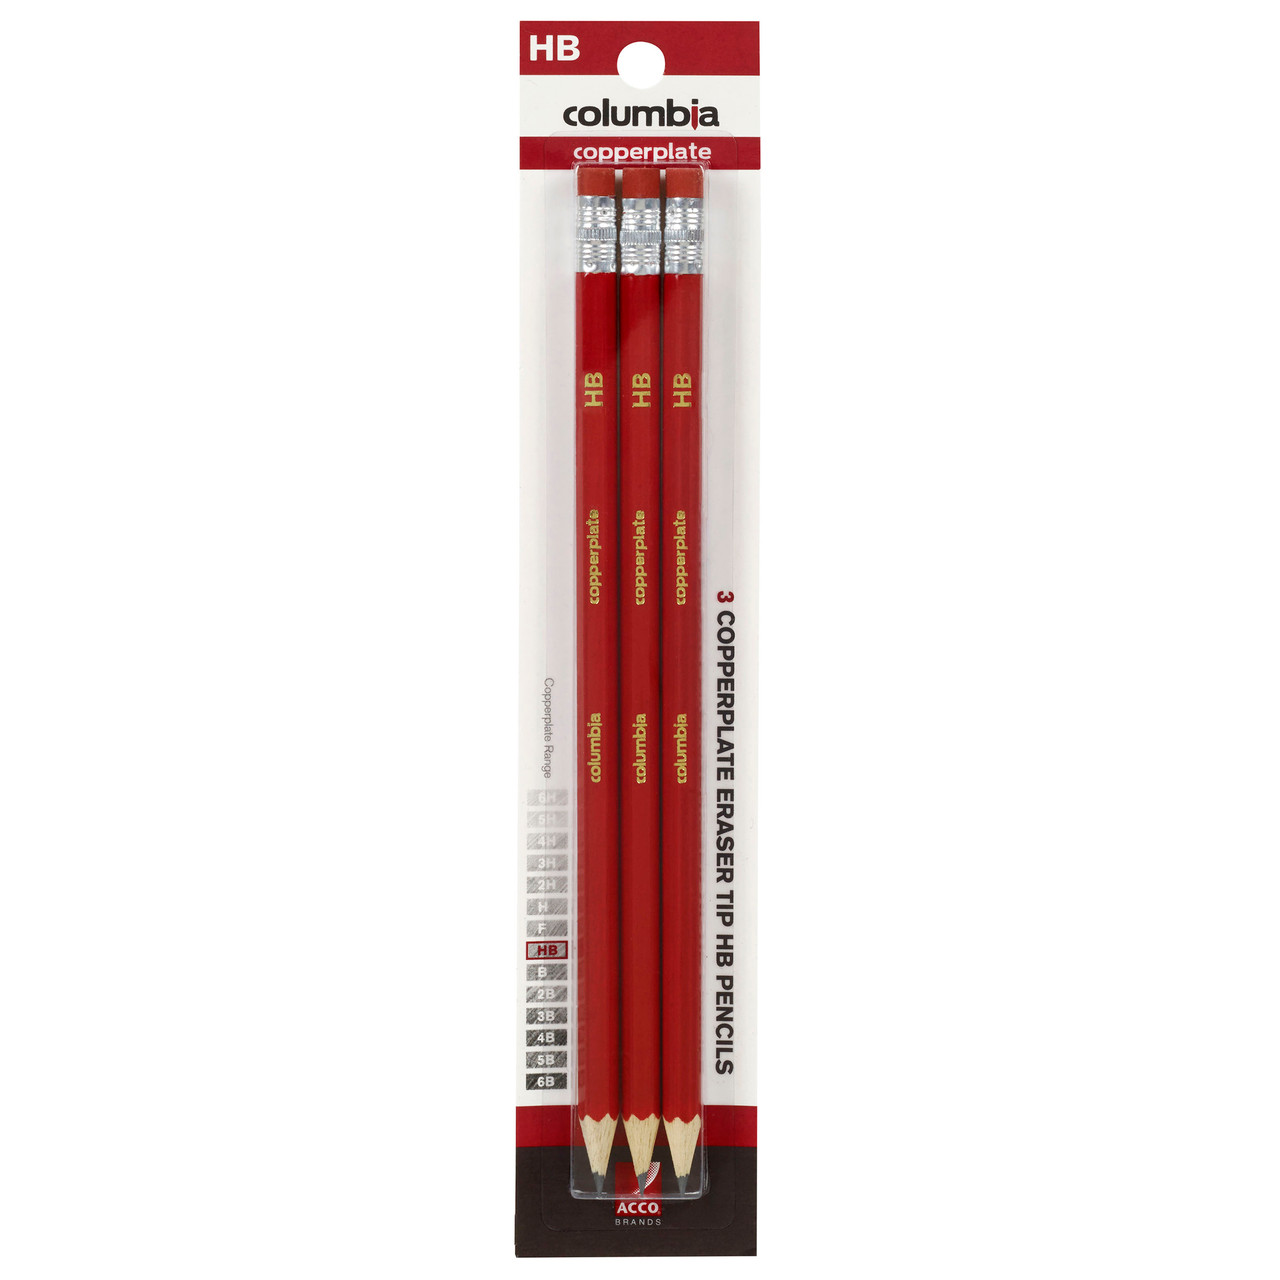 hb 3 pencil